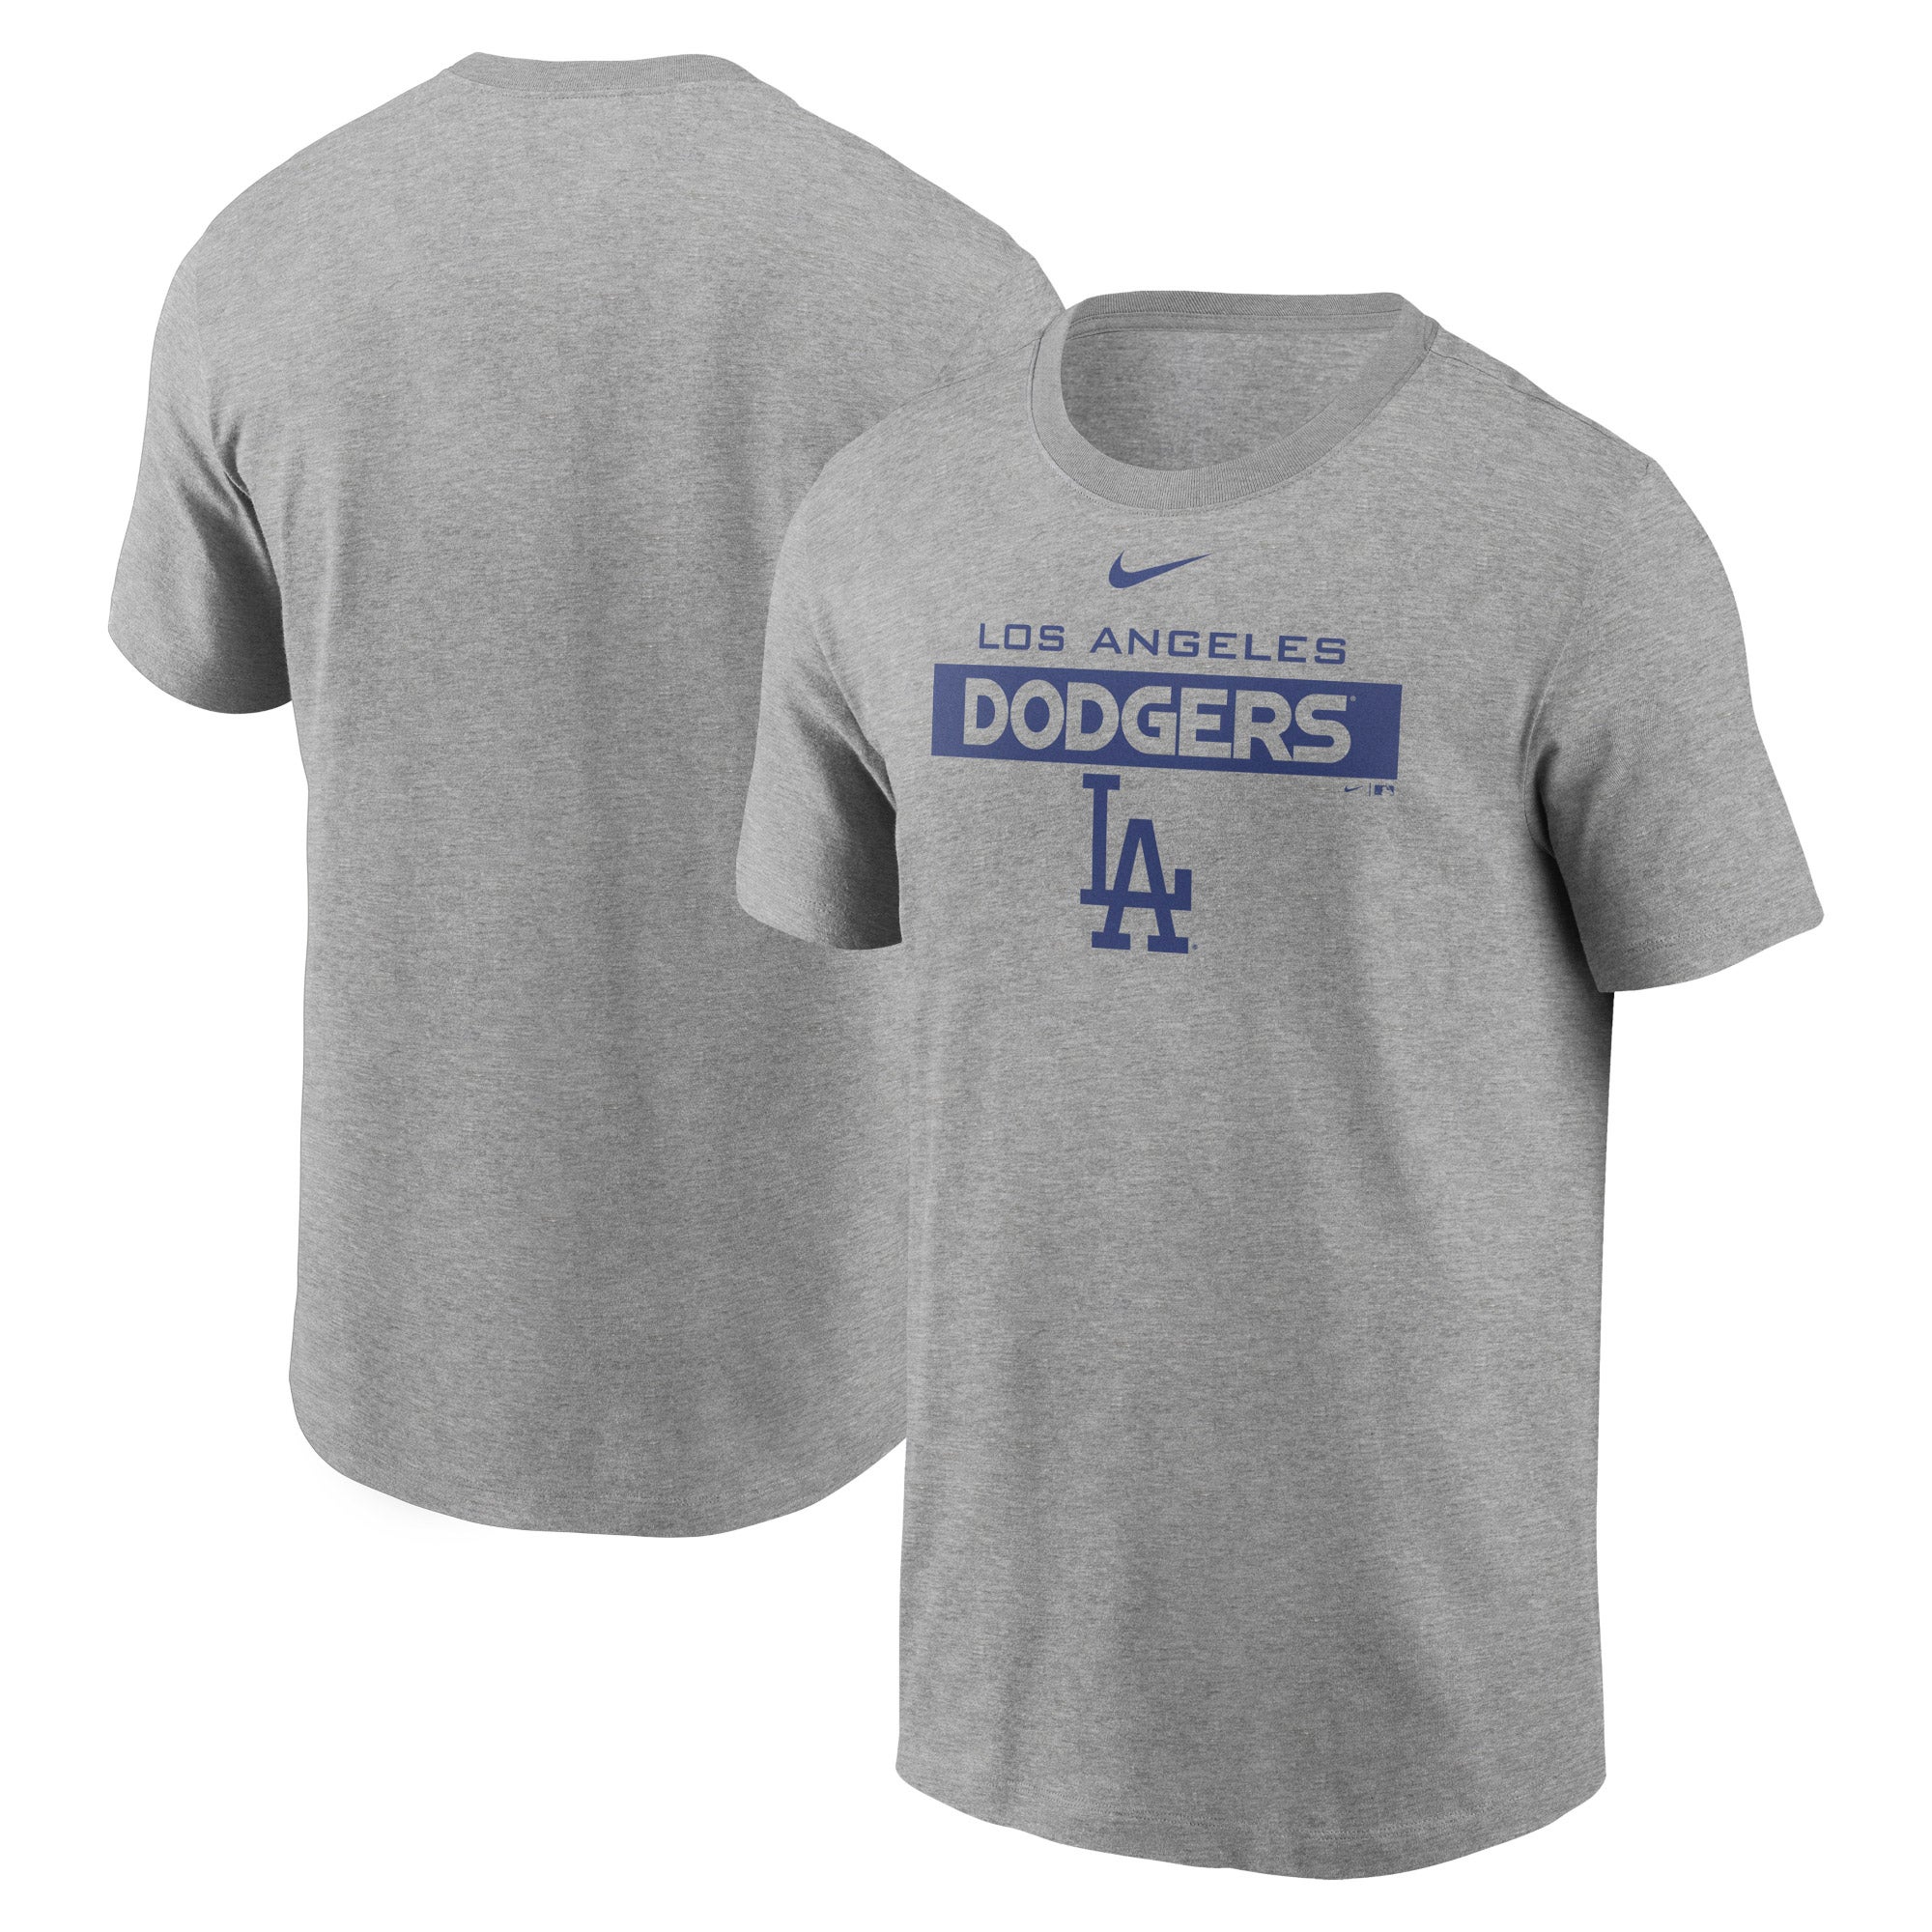 Nike Dodgers T-Shirt - Men's